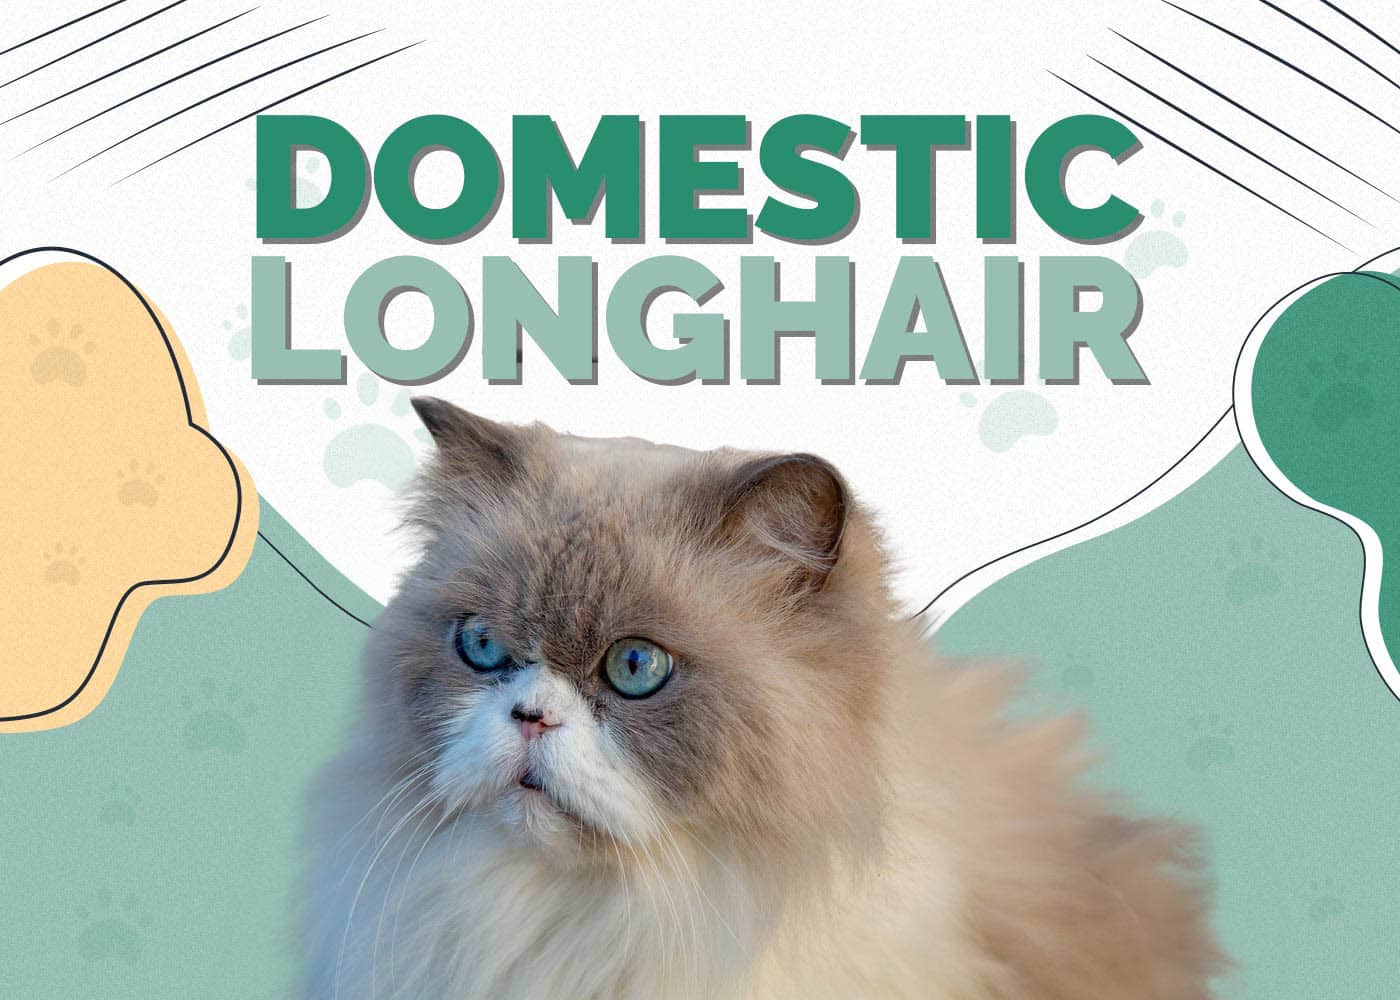 Domestic Longhair